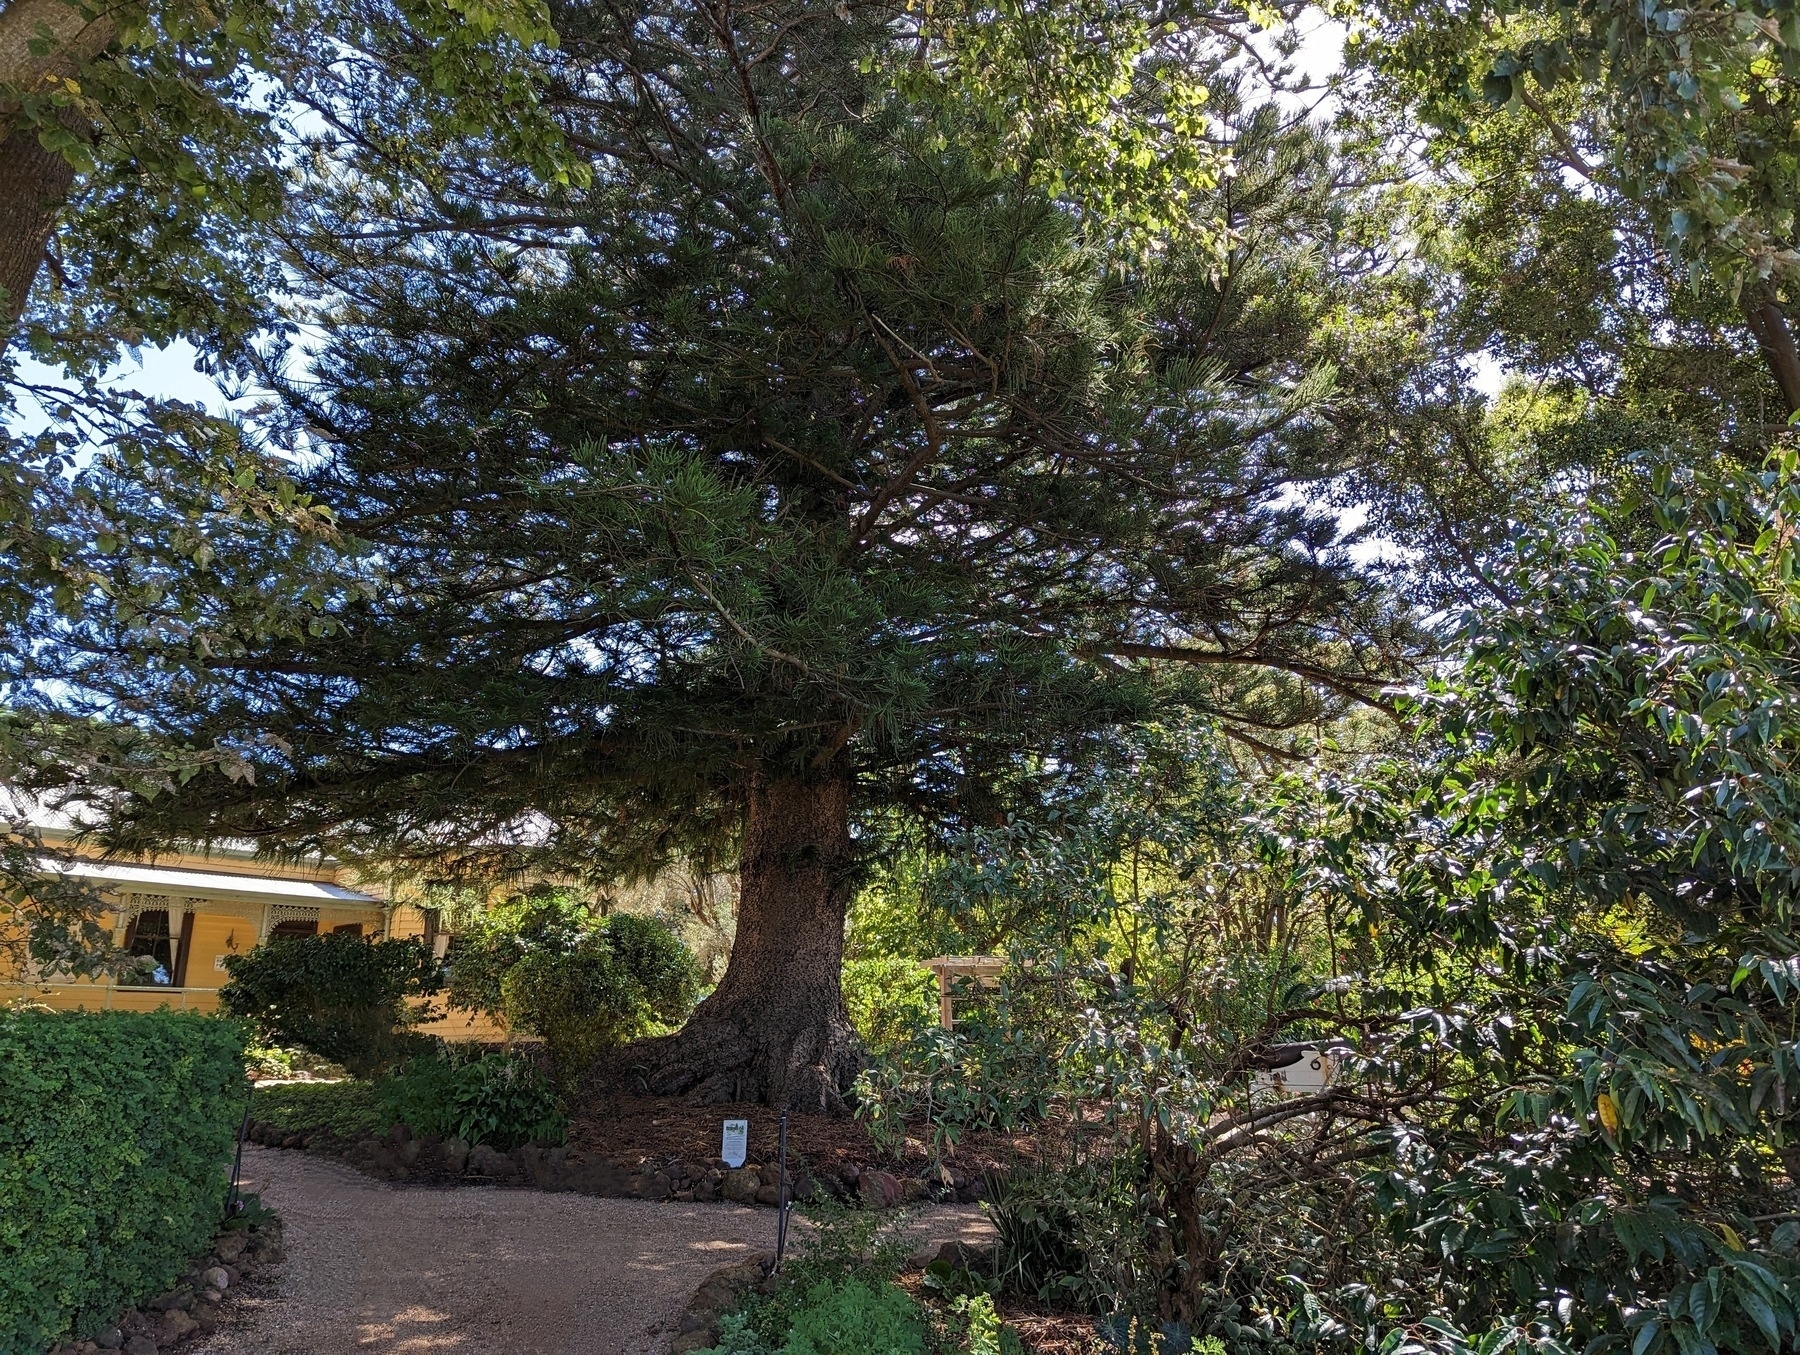 A photo of a tree, modified using Google’s Magic Eraser